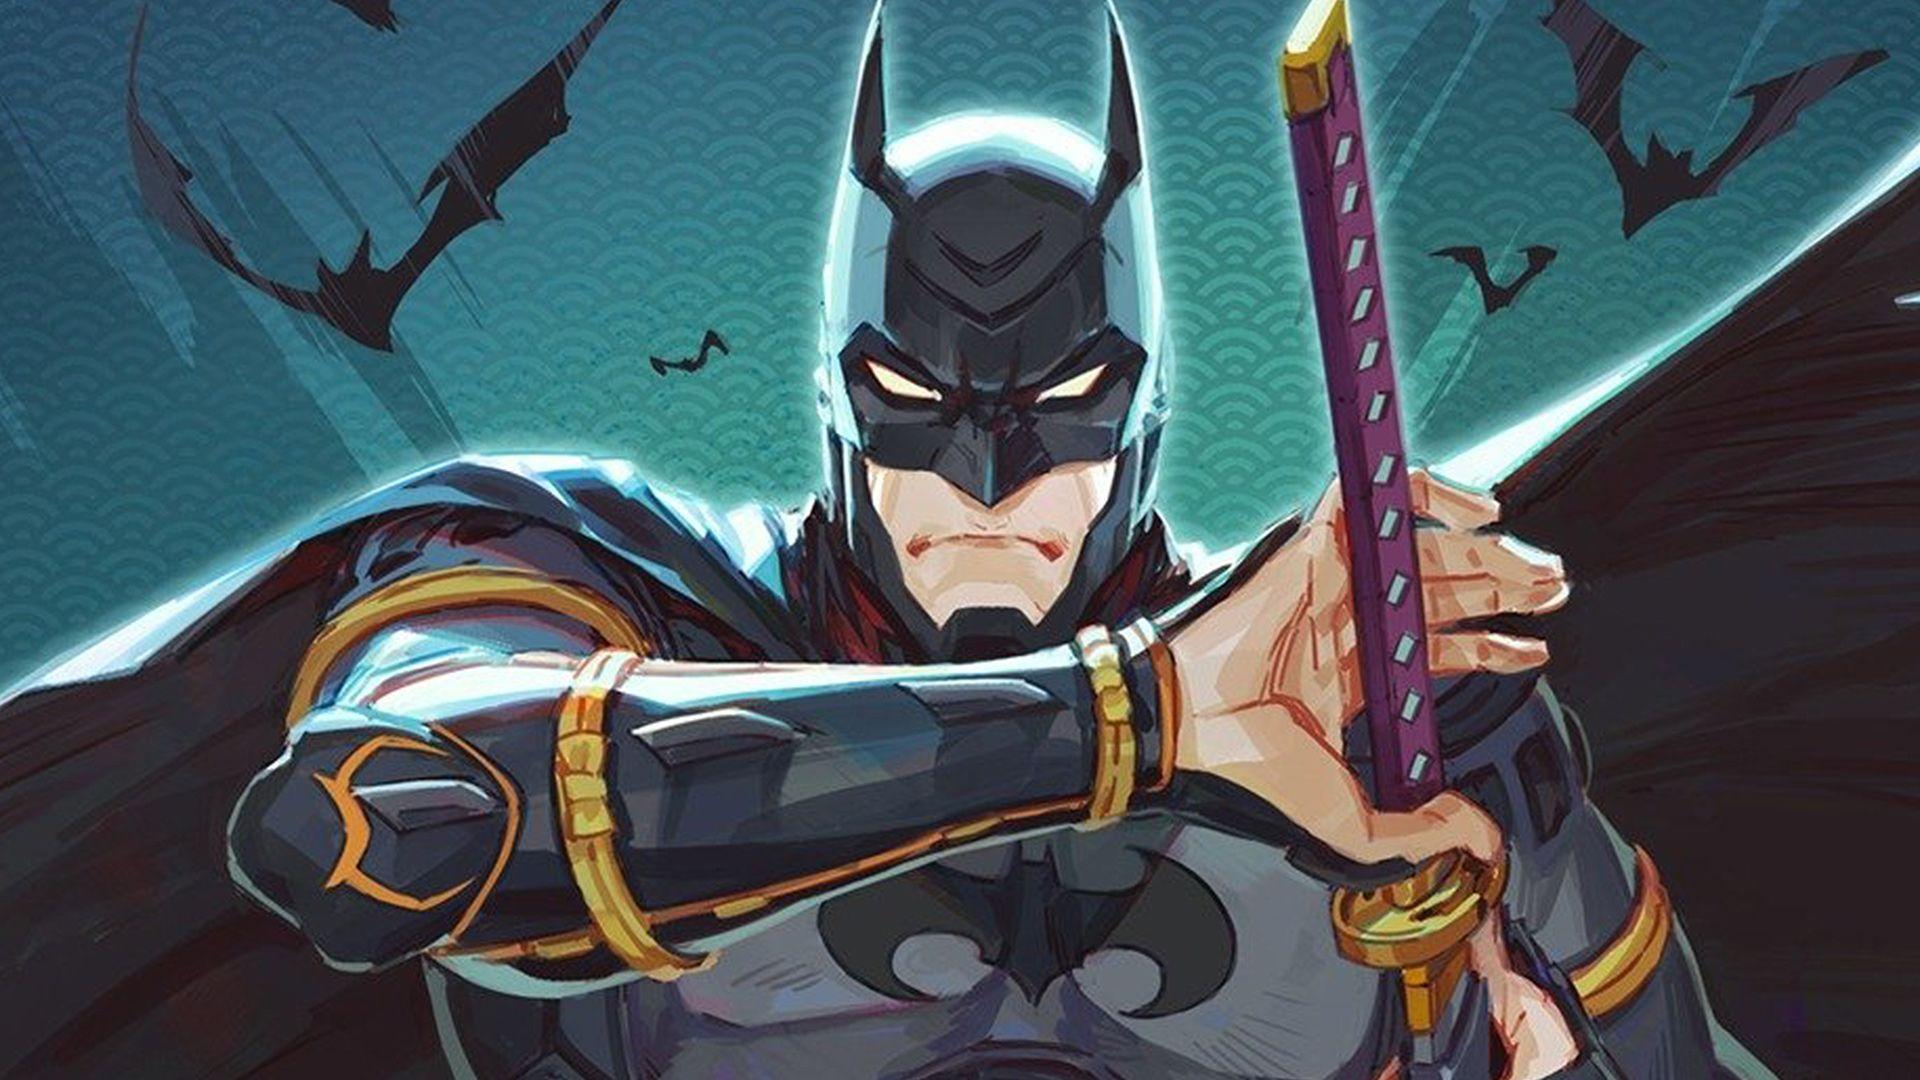 Batman Ninja Review Batman story unlike any other. IGN